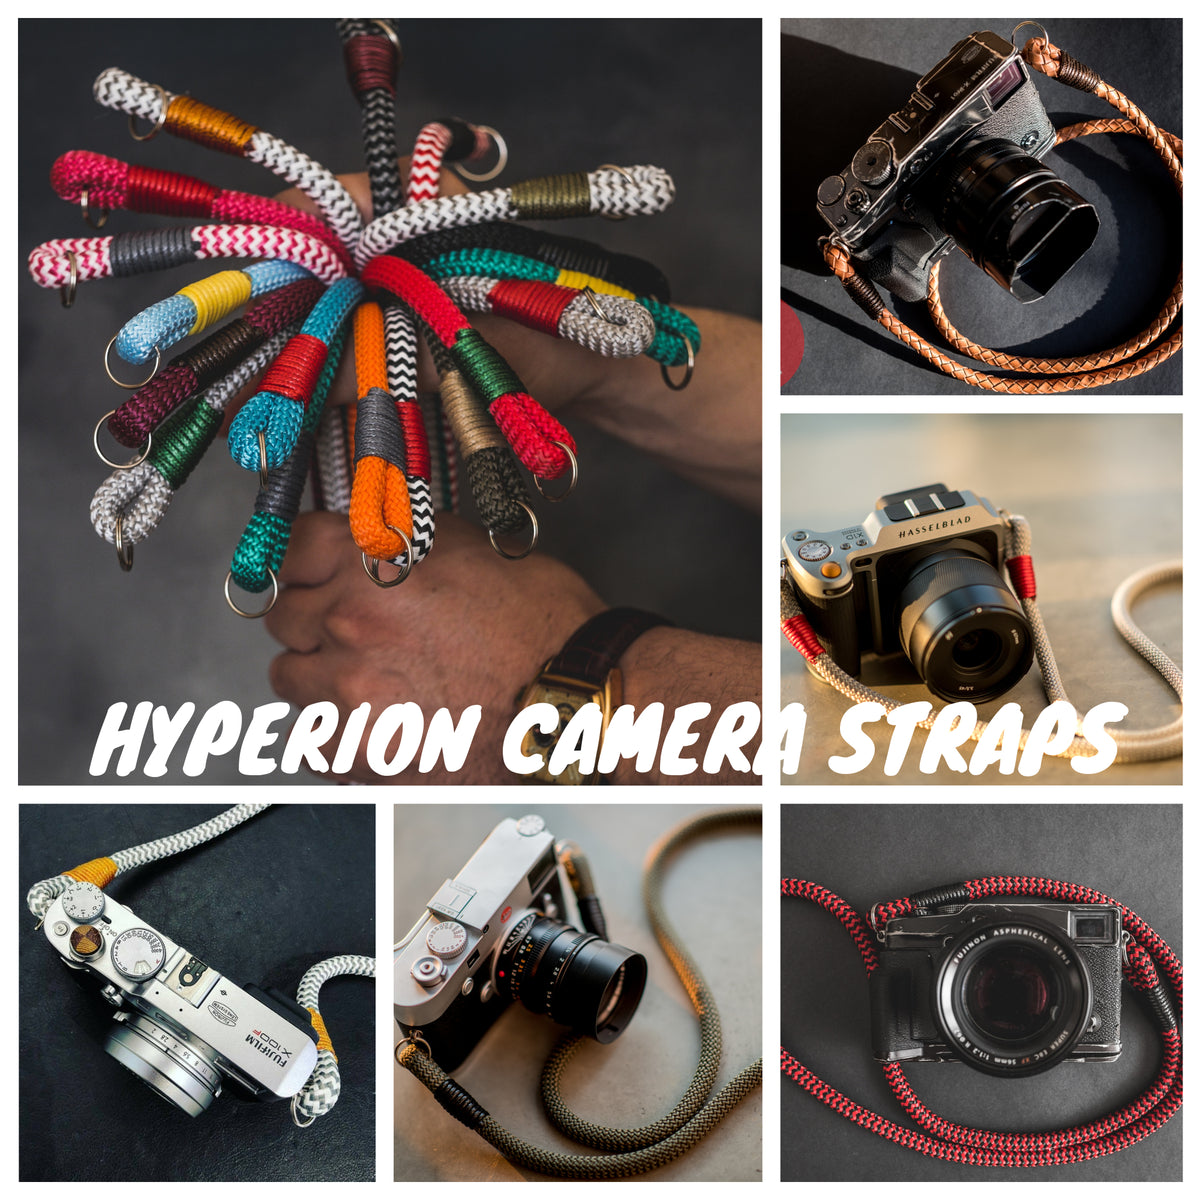 Hyperion Handmade Camera Straps